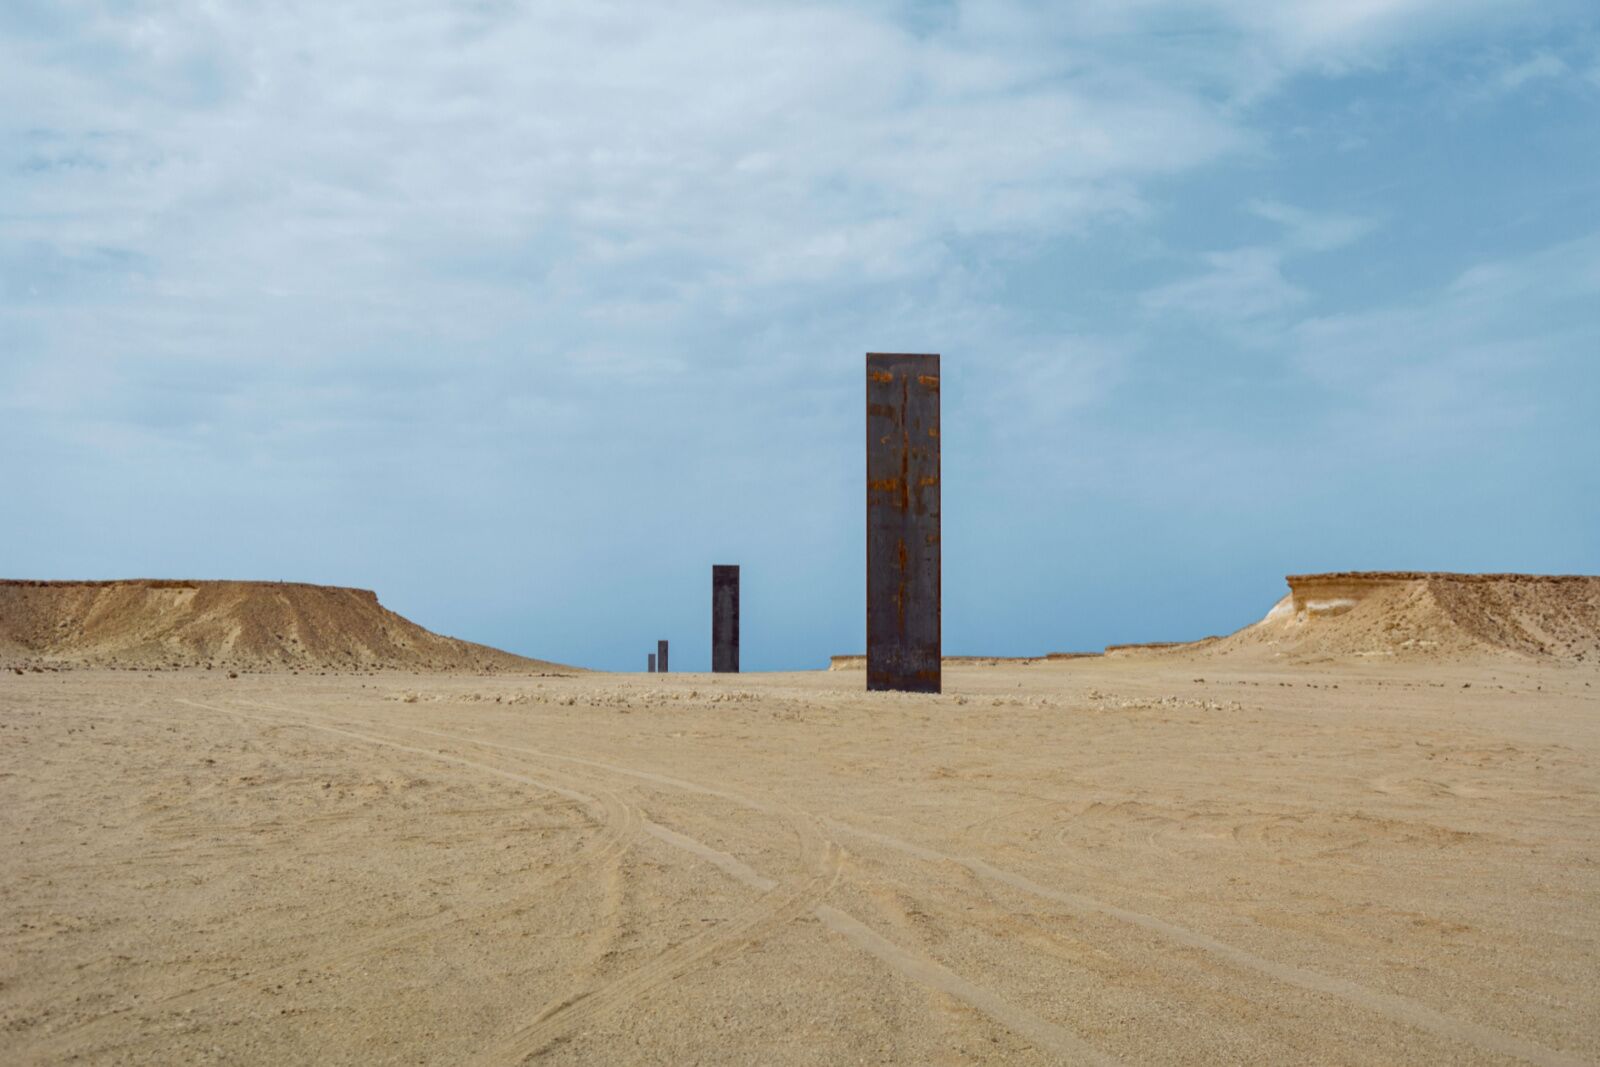 Rectangular sculptures in the desert